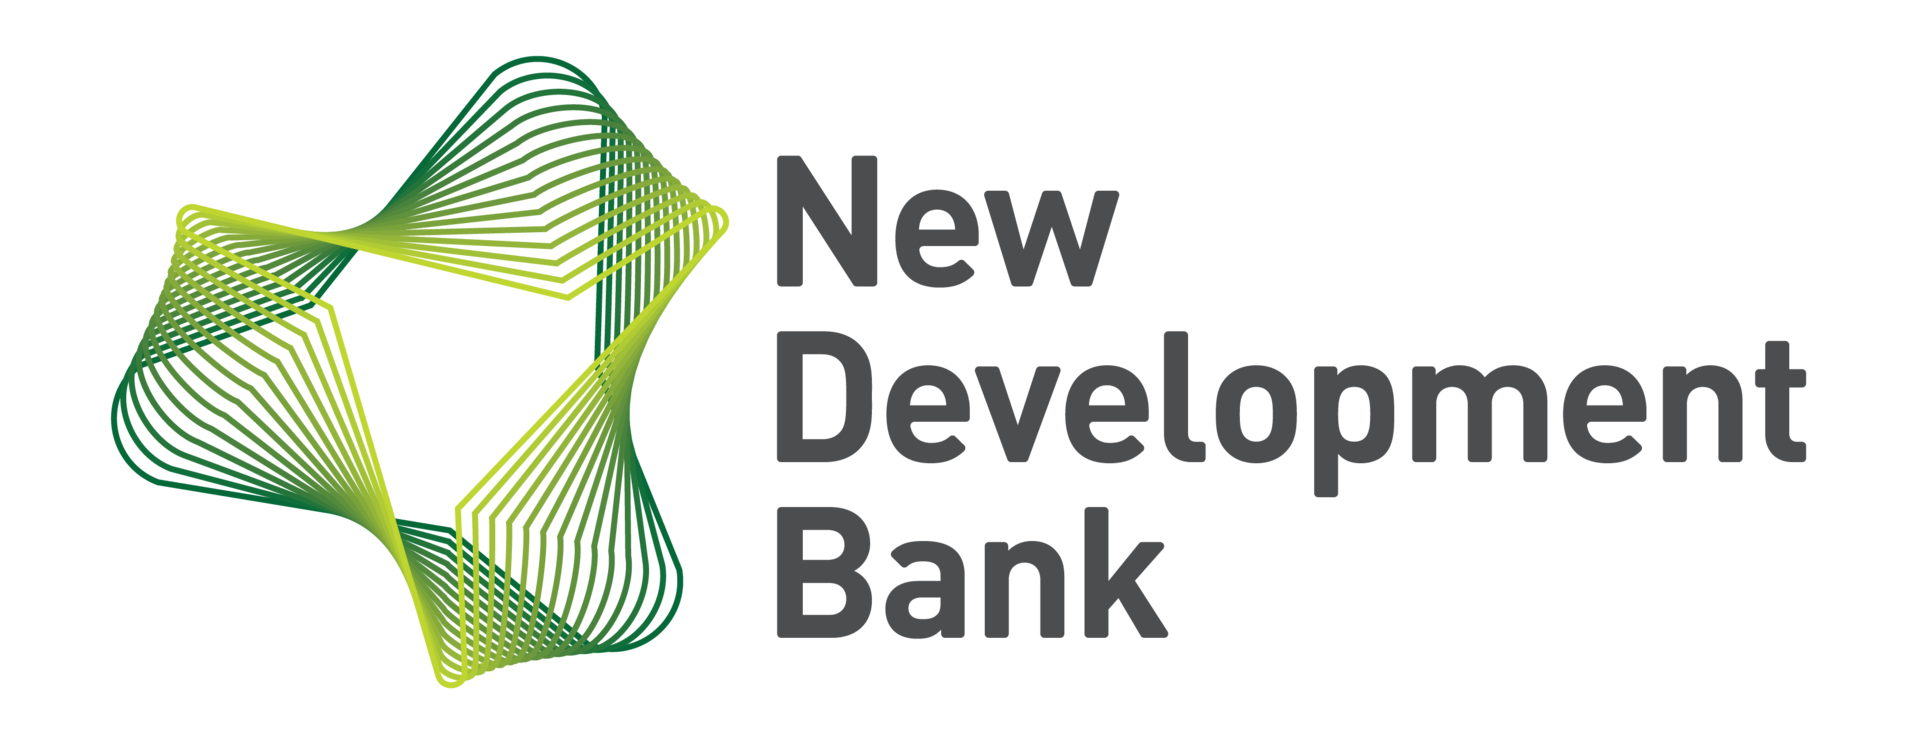 New Development Bank Logo